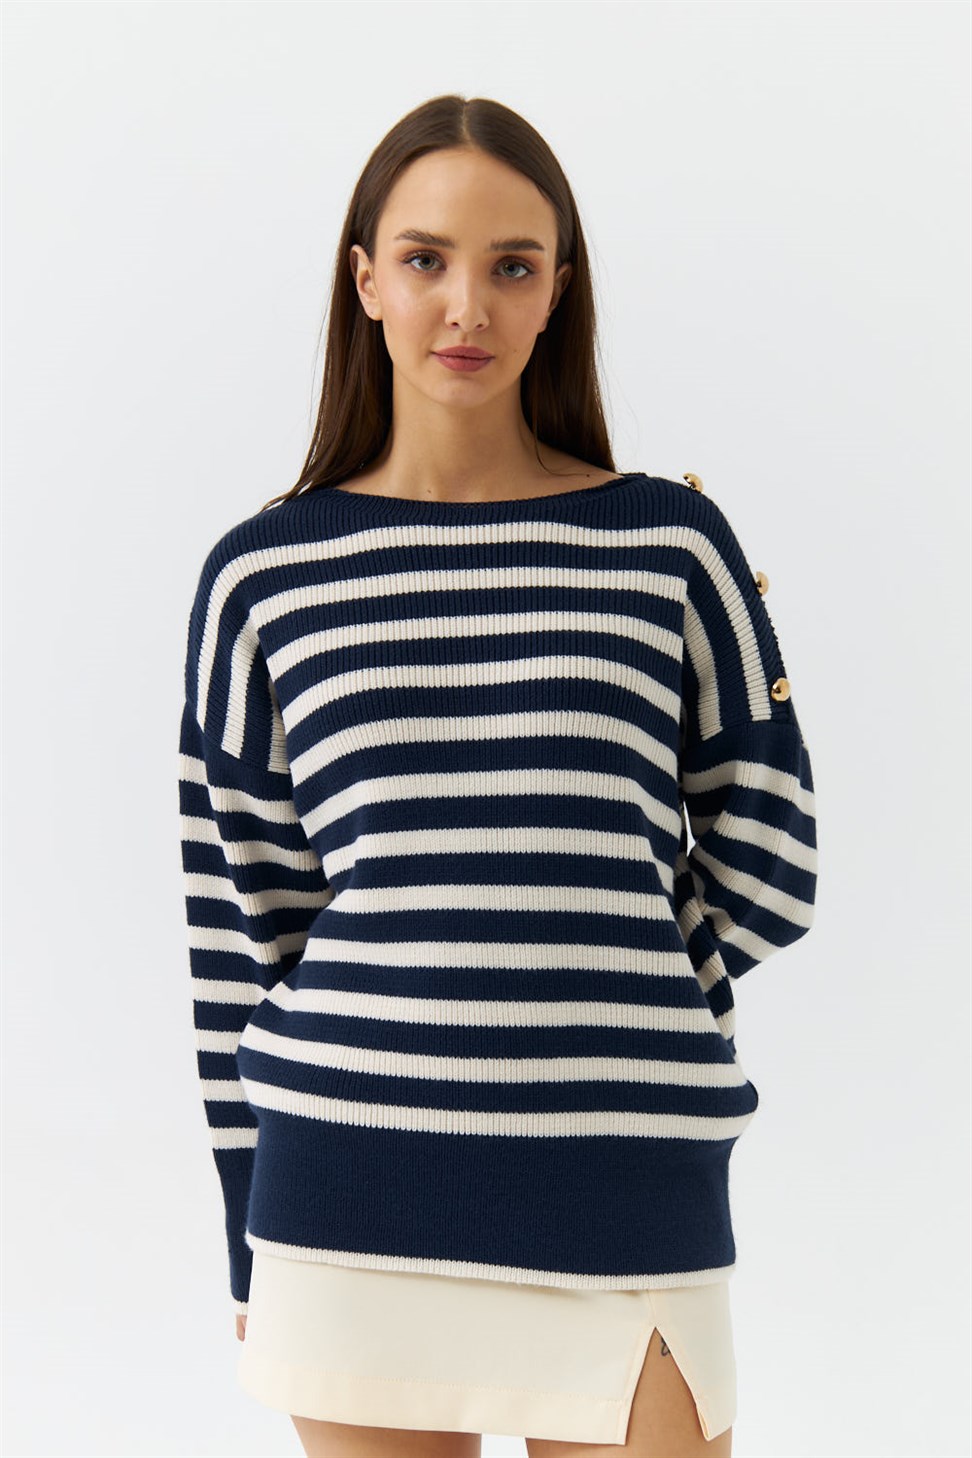 Crew Neck Striped Navy Blue Womens Knitwear Sweater